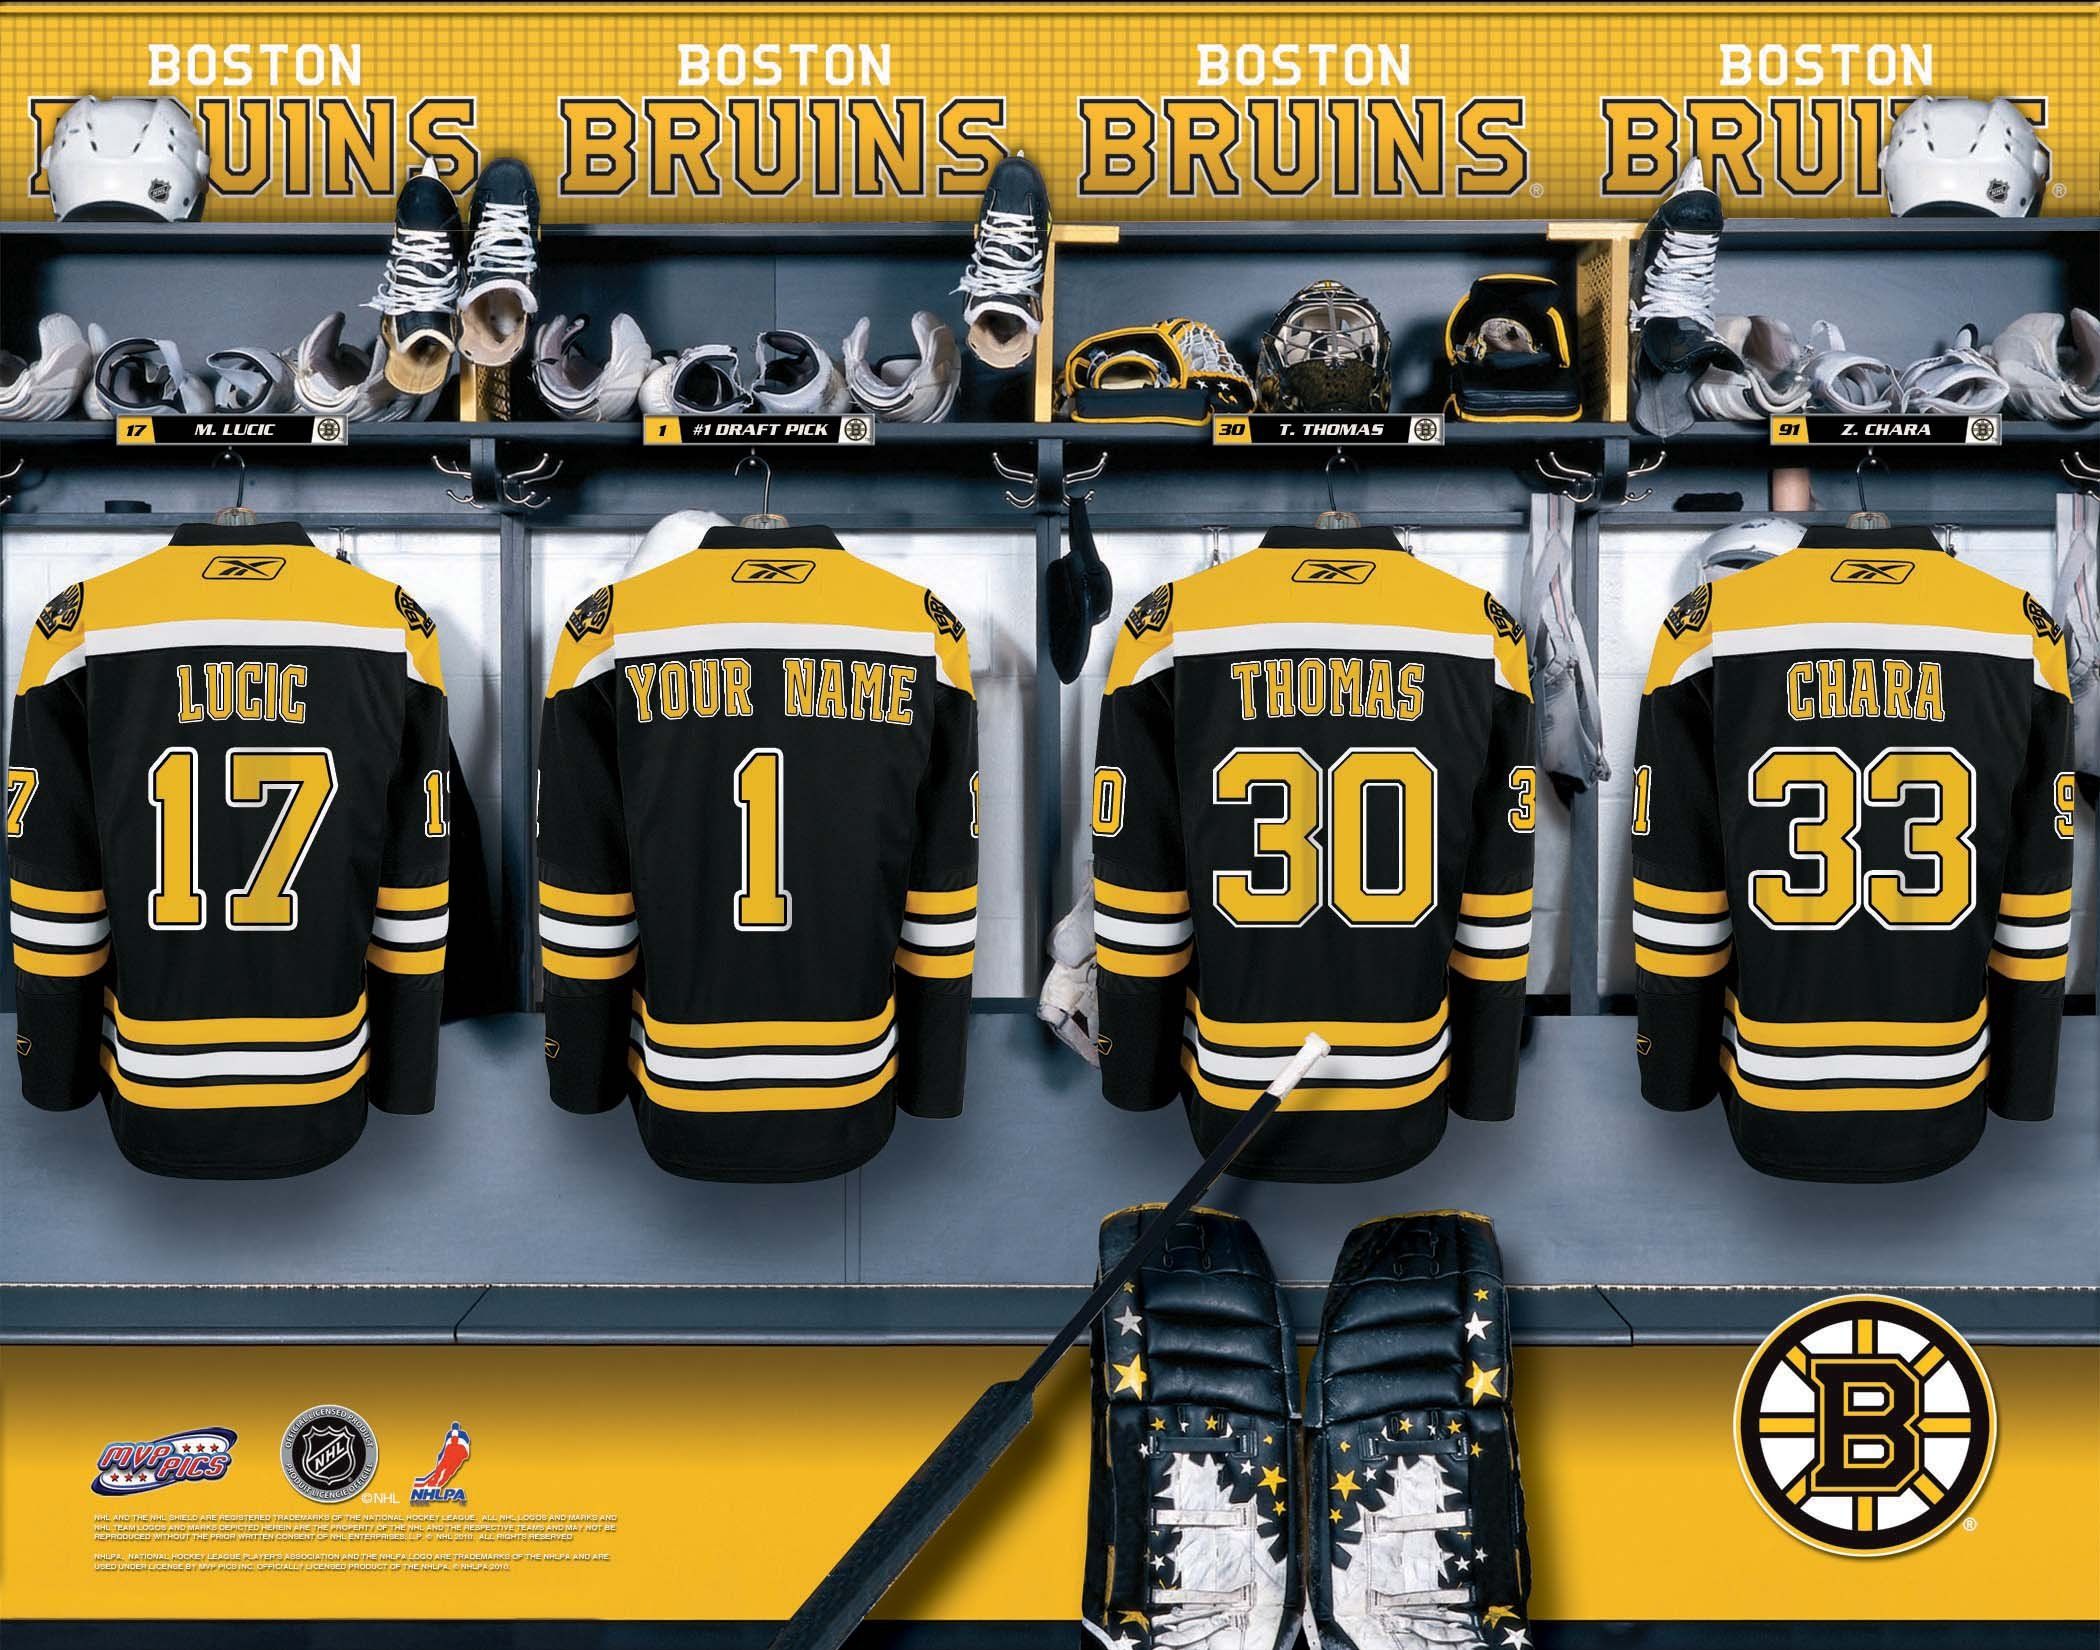 BOSTON BRUINS nhl hockey (20) wallpaper | 2100x1650 | 336461 ...